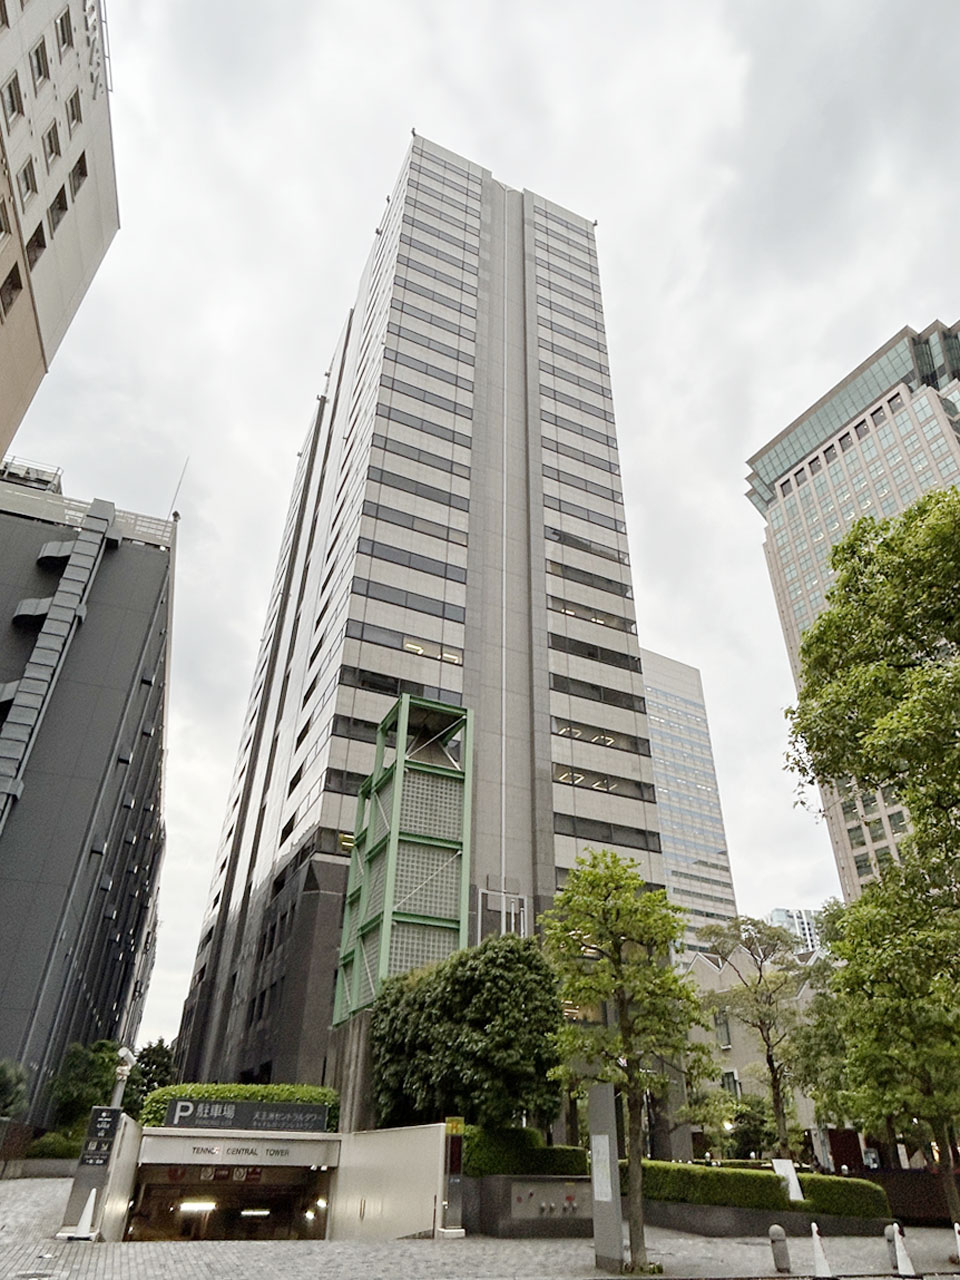 Tennozu Central Towerbuilding